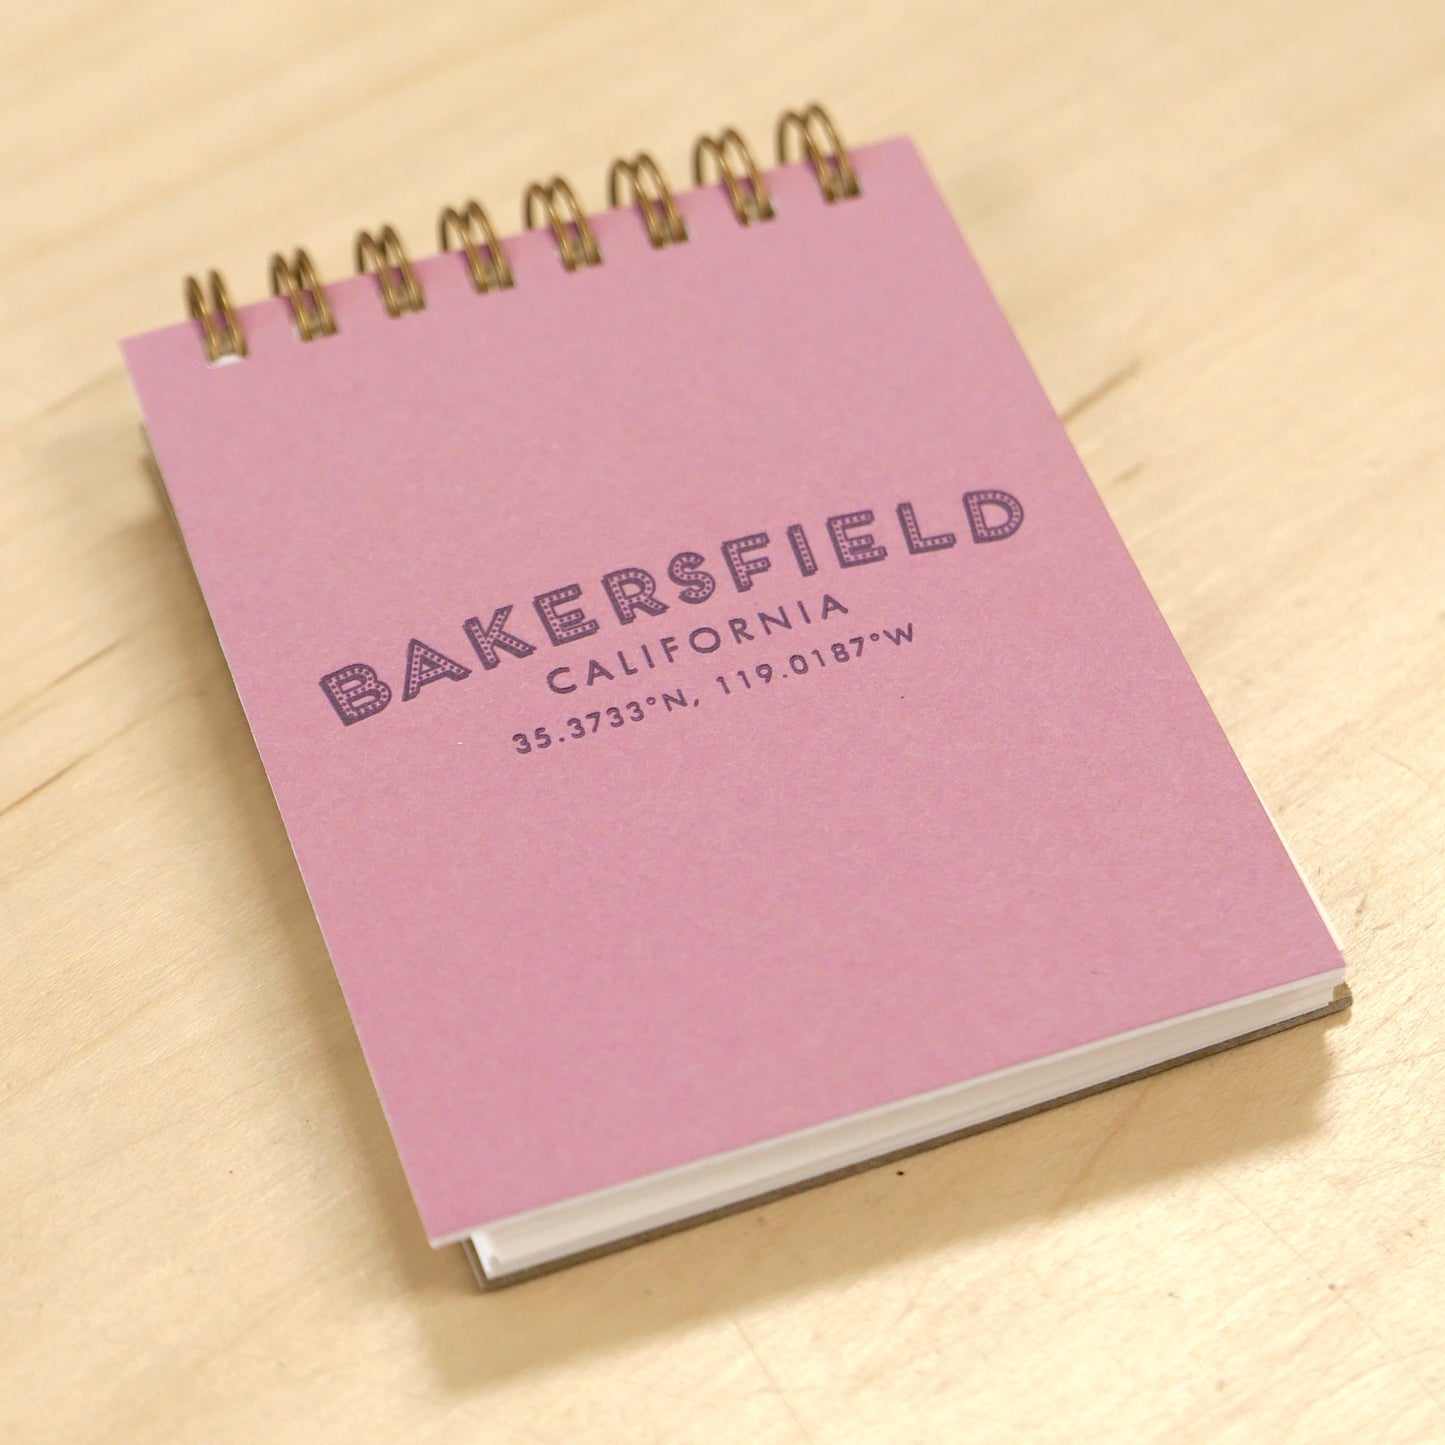 Bakersfield Coordinates Mini Notebook